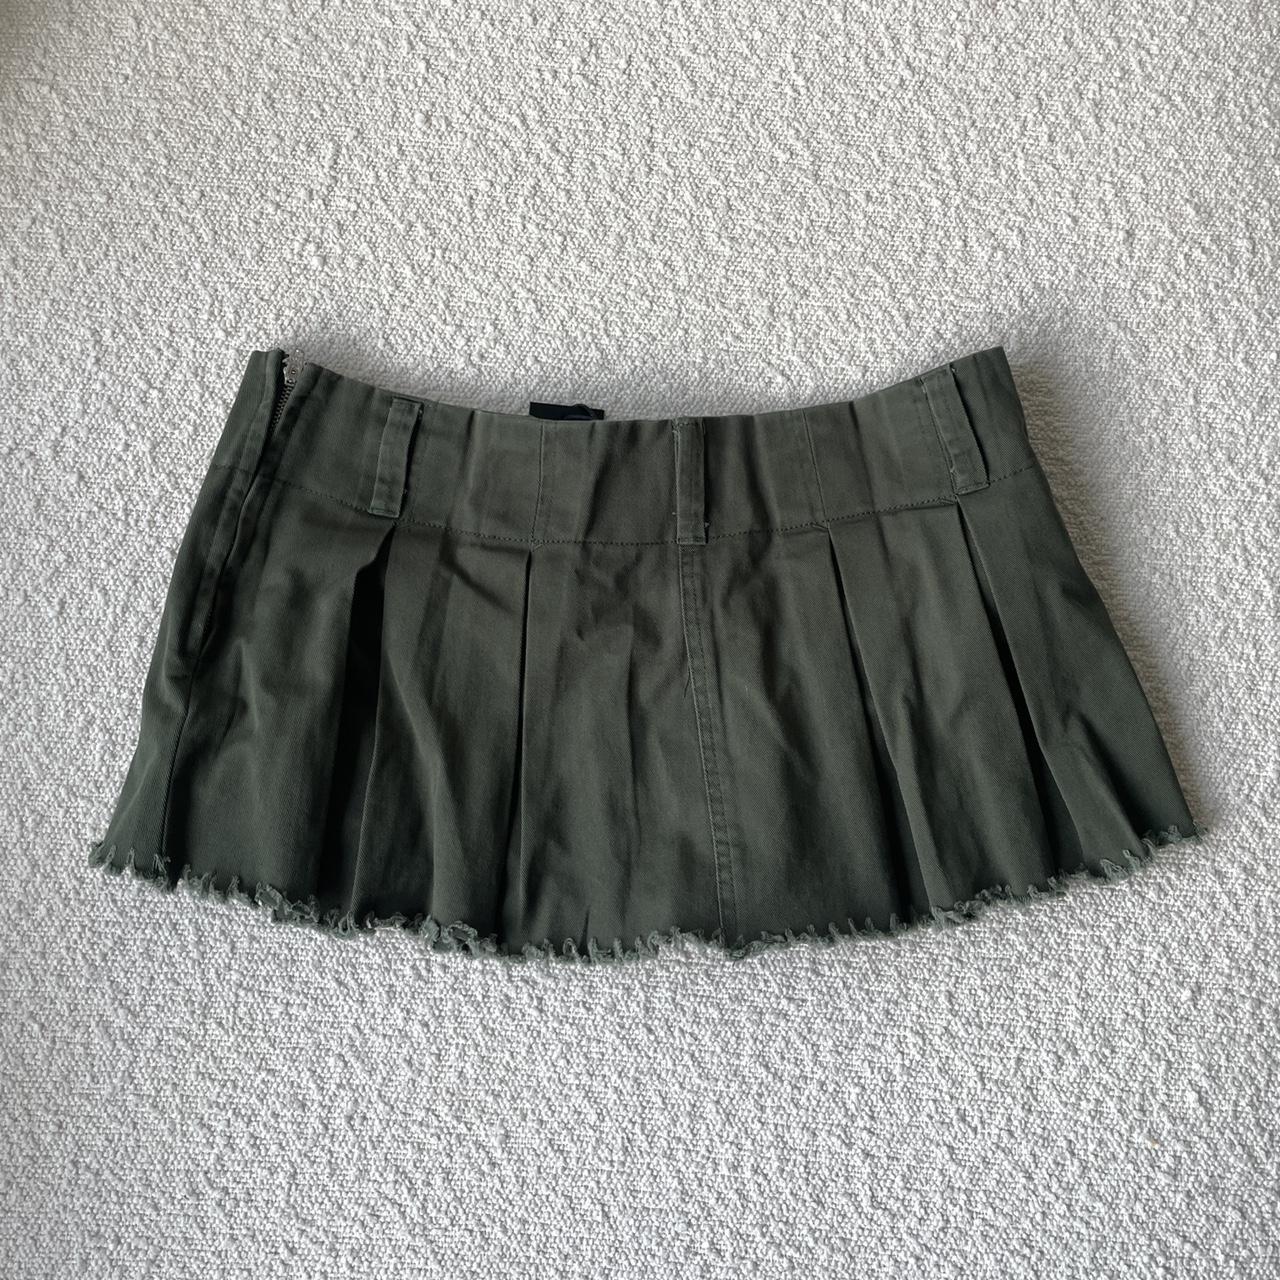 Lioness Women's Khaki Skirt (3)